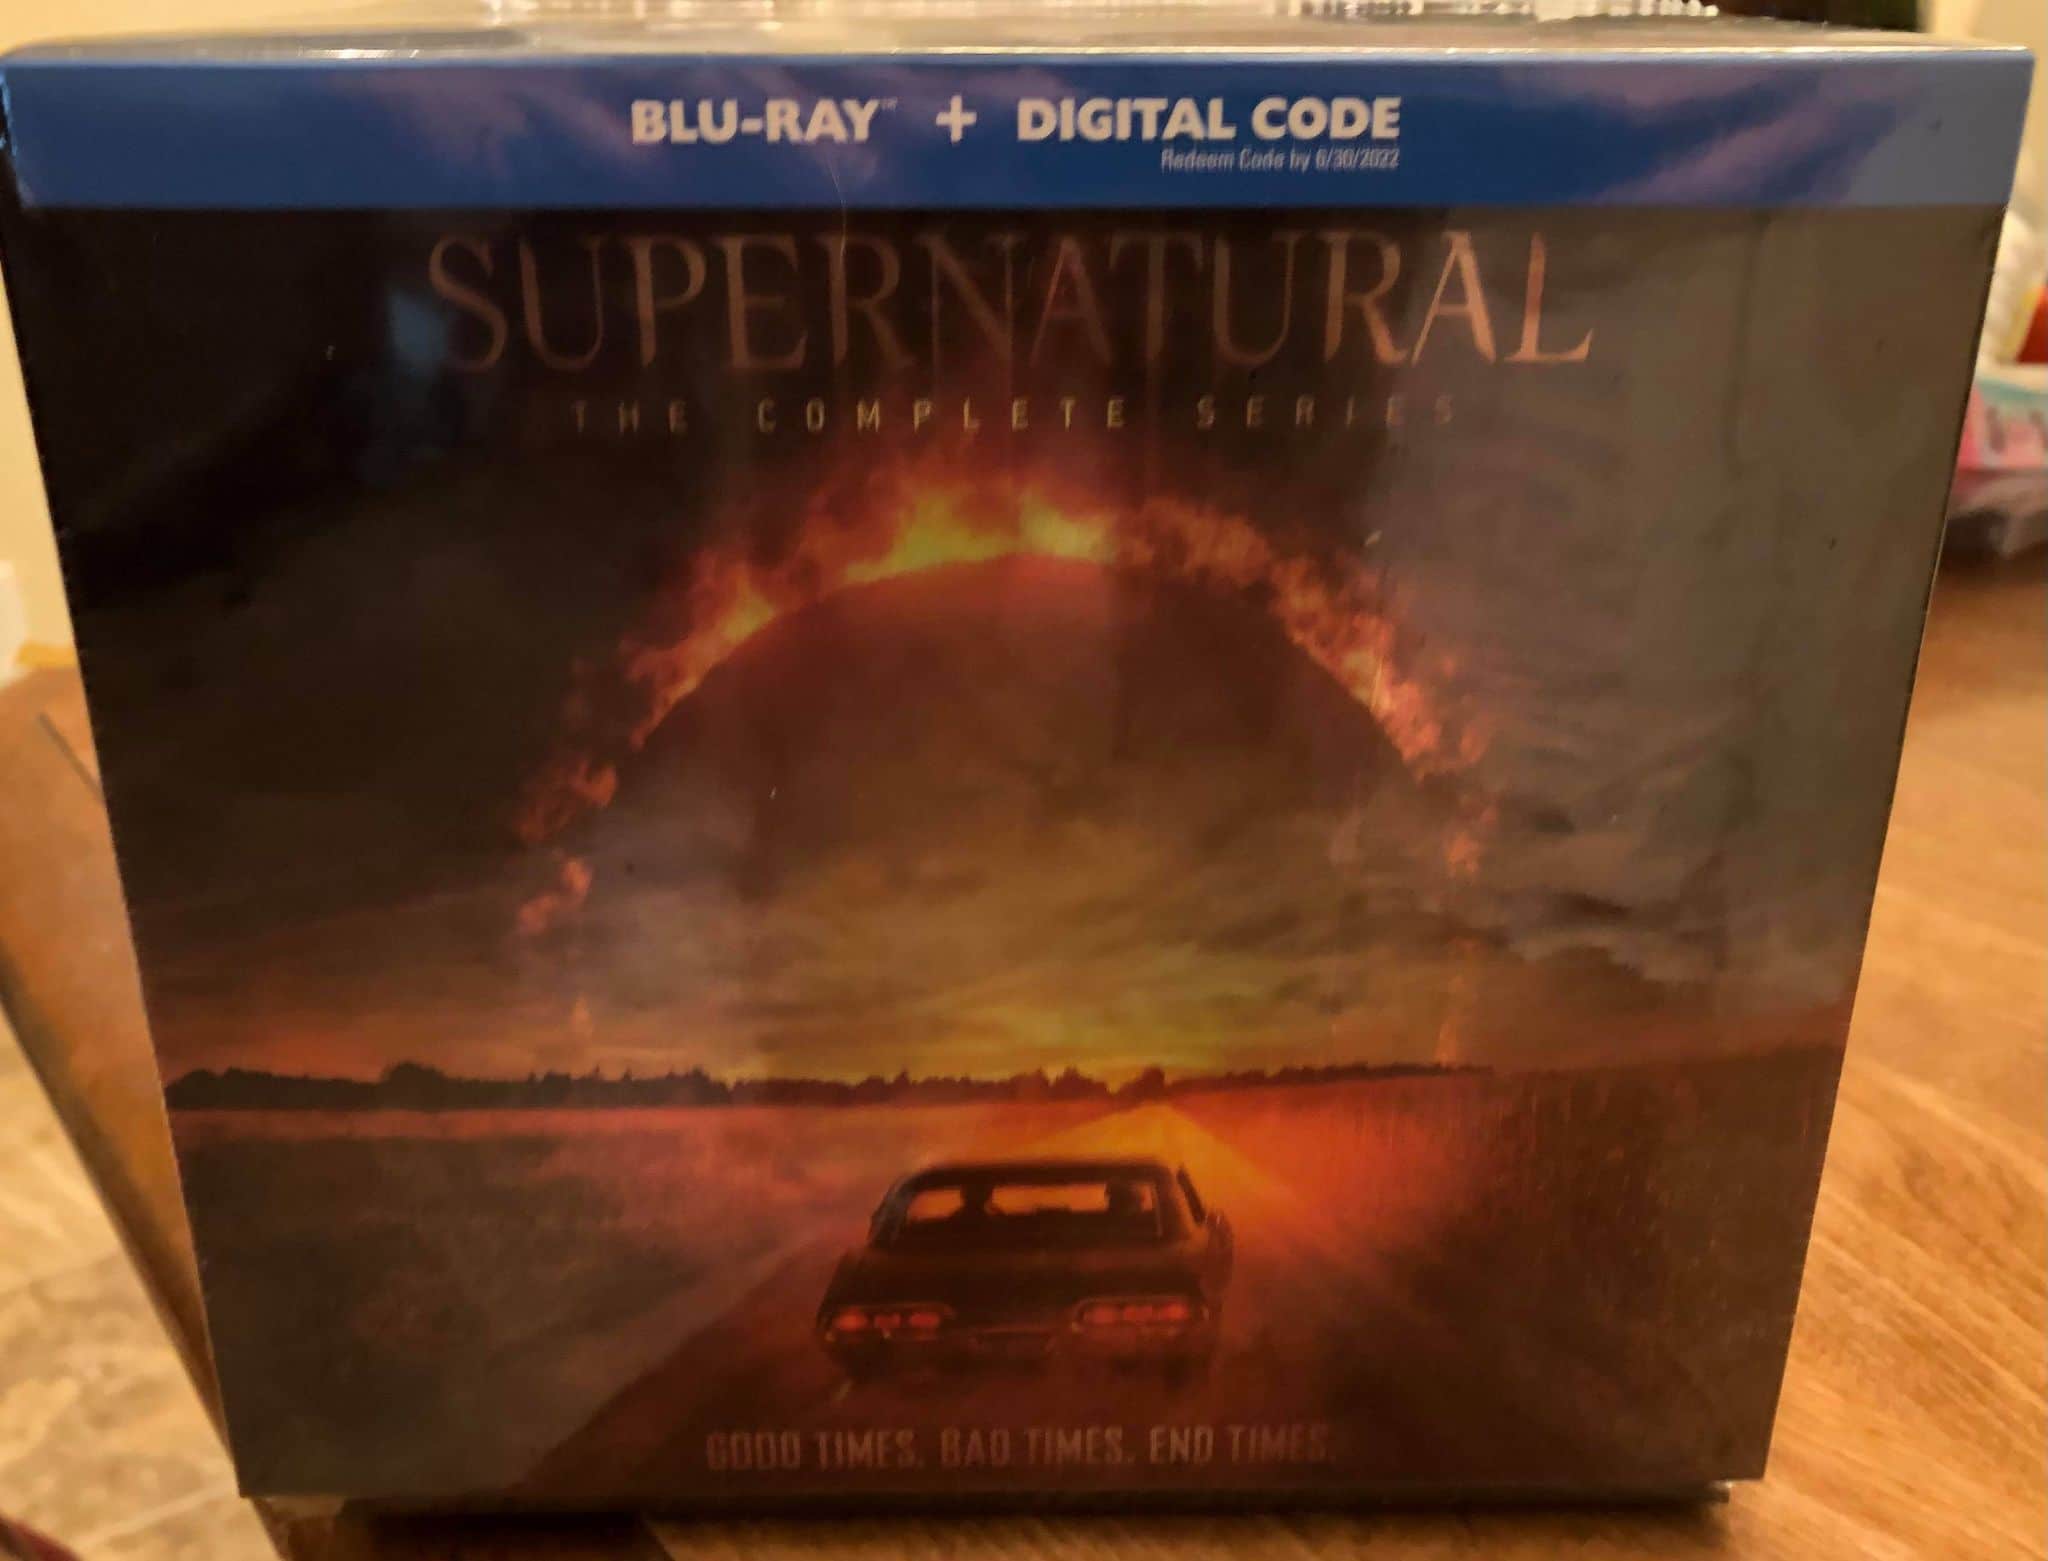 Geek insider, geekinsider, geekinsider. Com,, review: supernatural 15 season box set available 5/25, entertainment